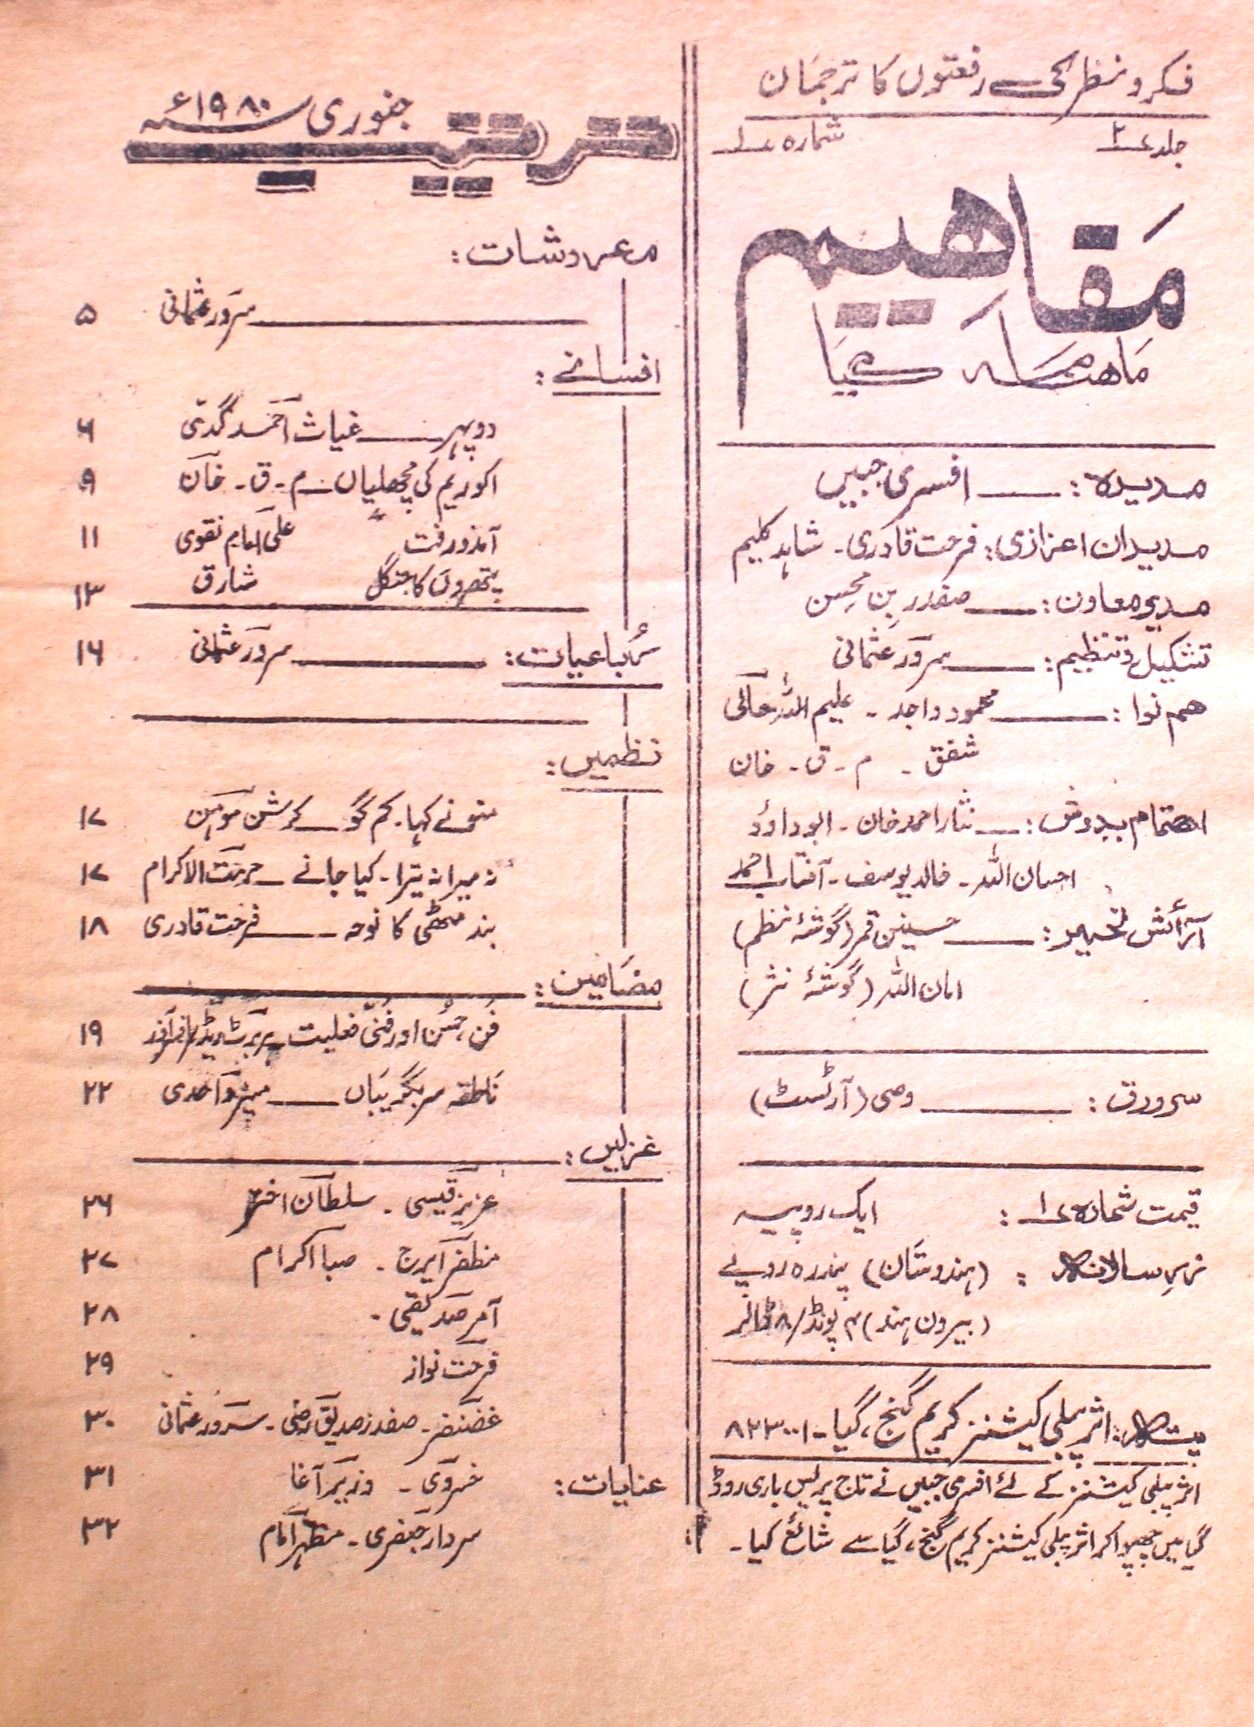 Mafaaheem Jild.2 No.1 1980-SVK